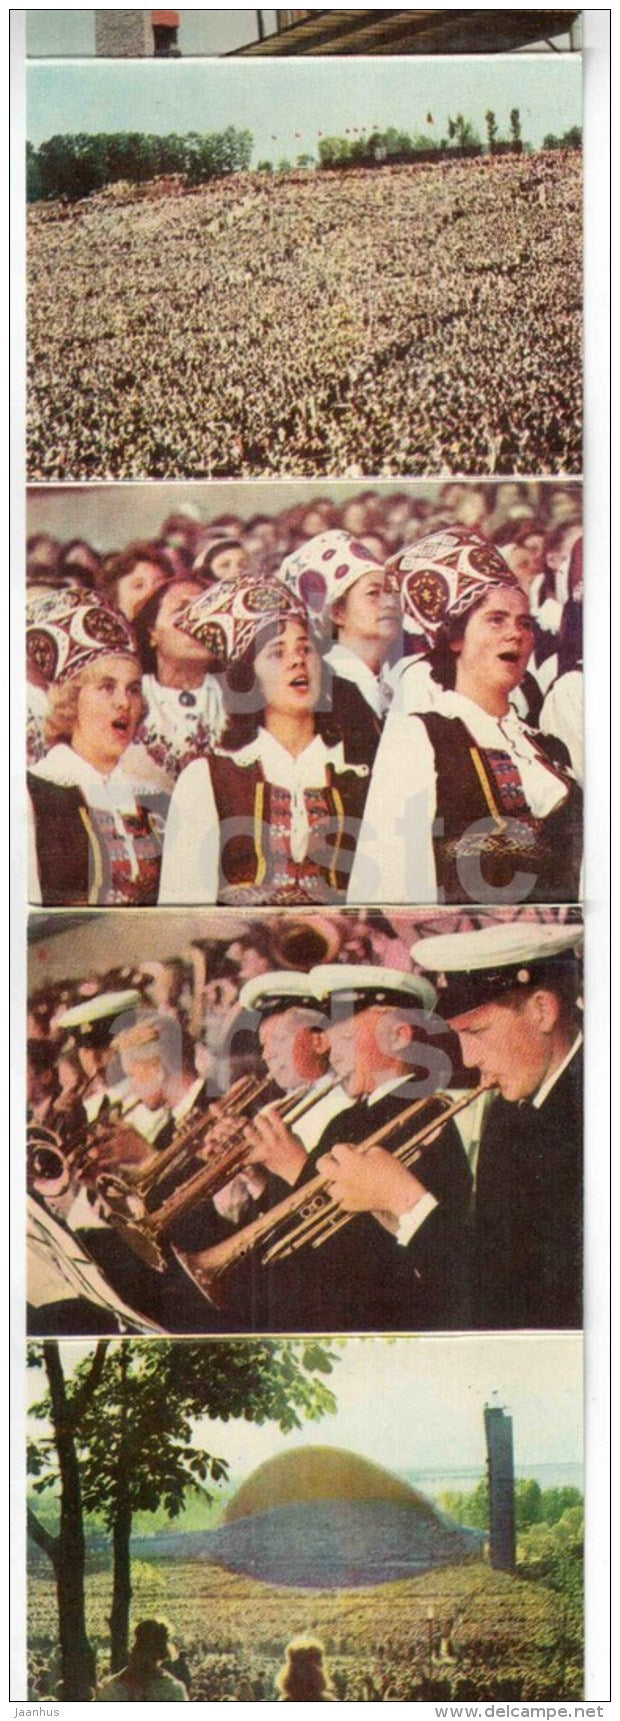 Estonian Song Festival - mini Photo Book - Leporello - 1969 - Estonia USSR - unused - JH Postcards